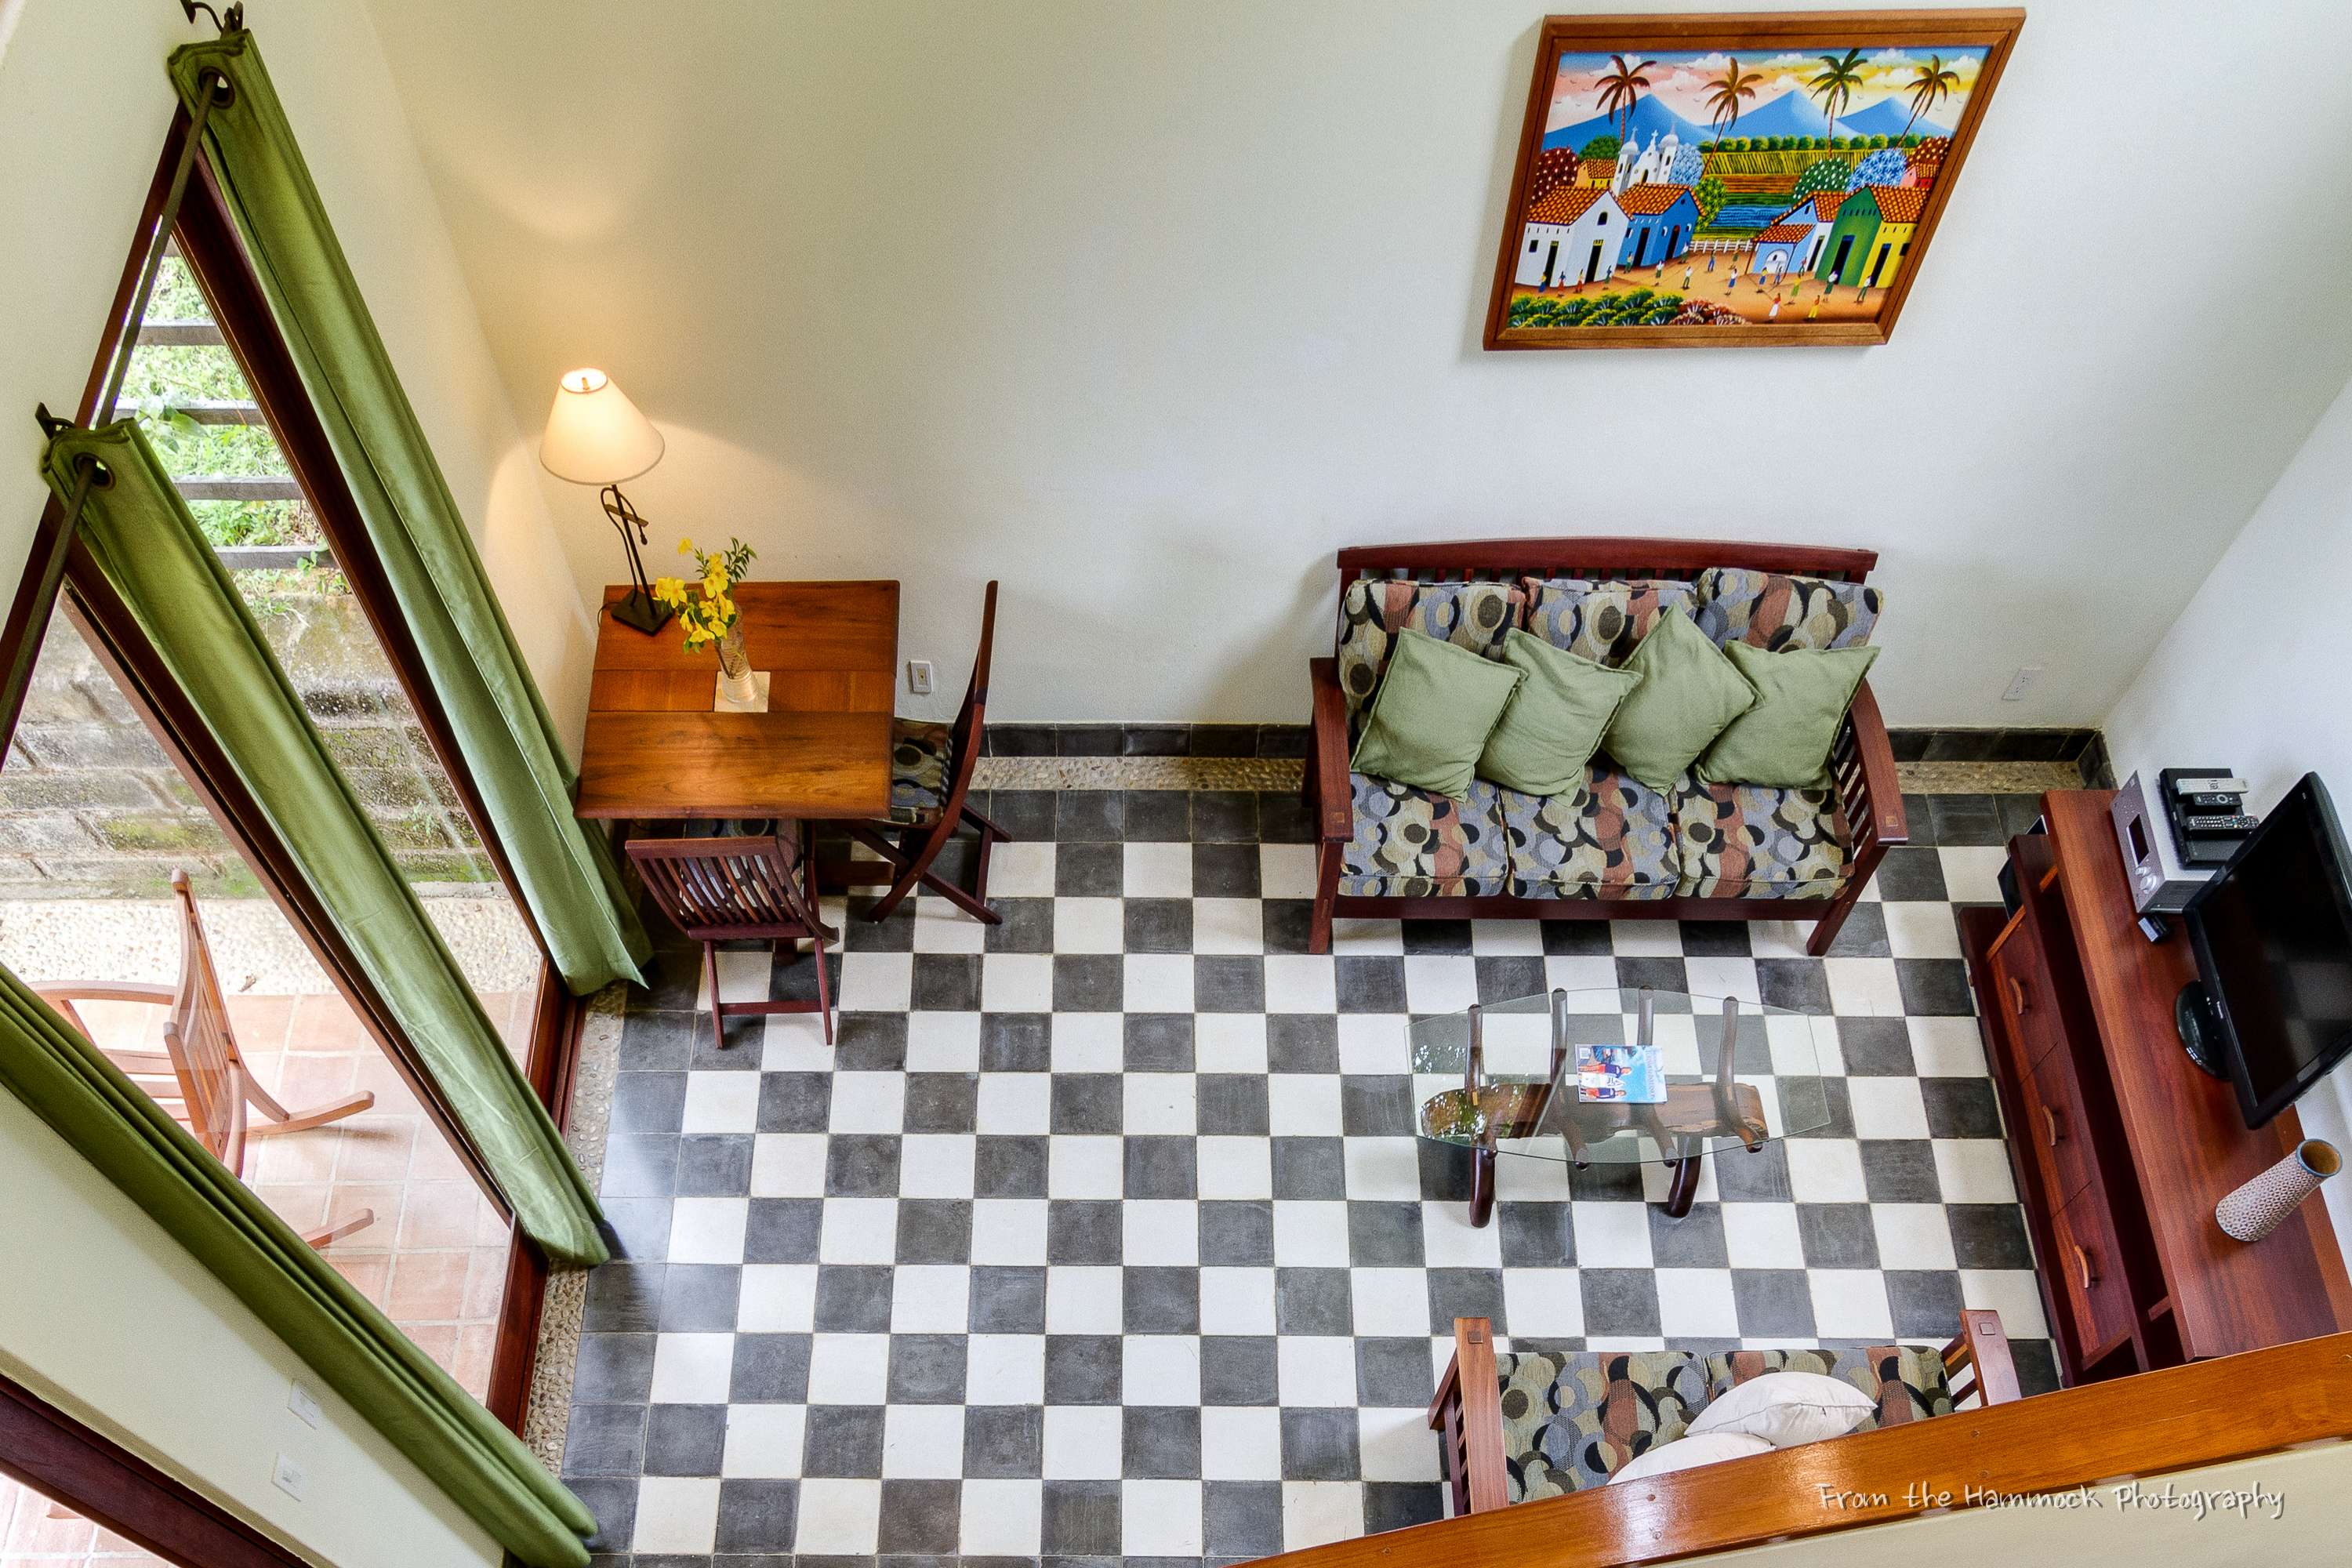 Living Room at Palermo Hotel and Resort San Juan del Sur, Nicaragua